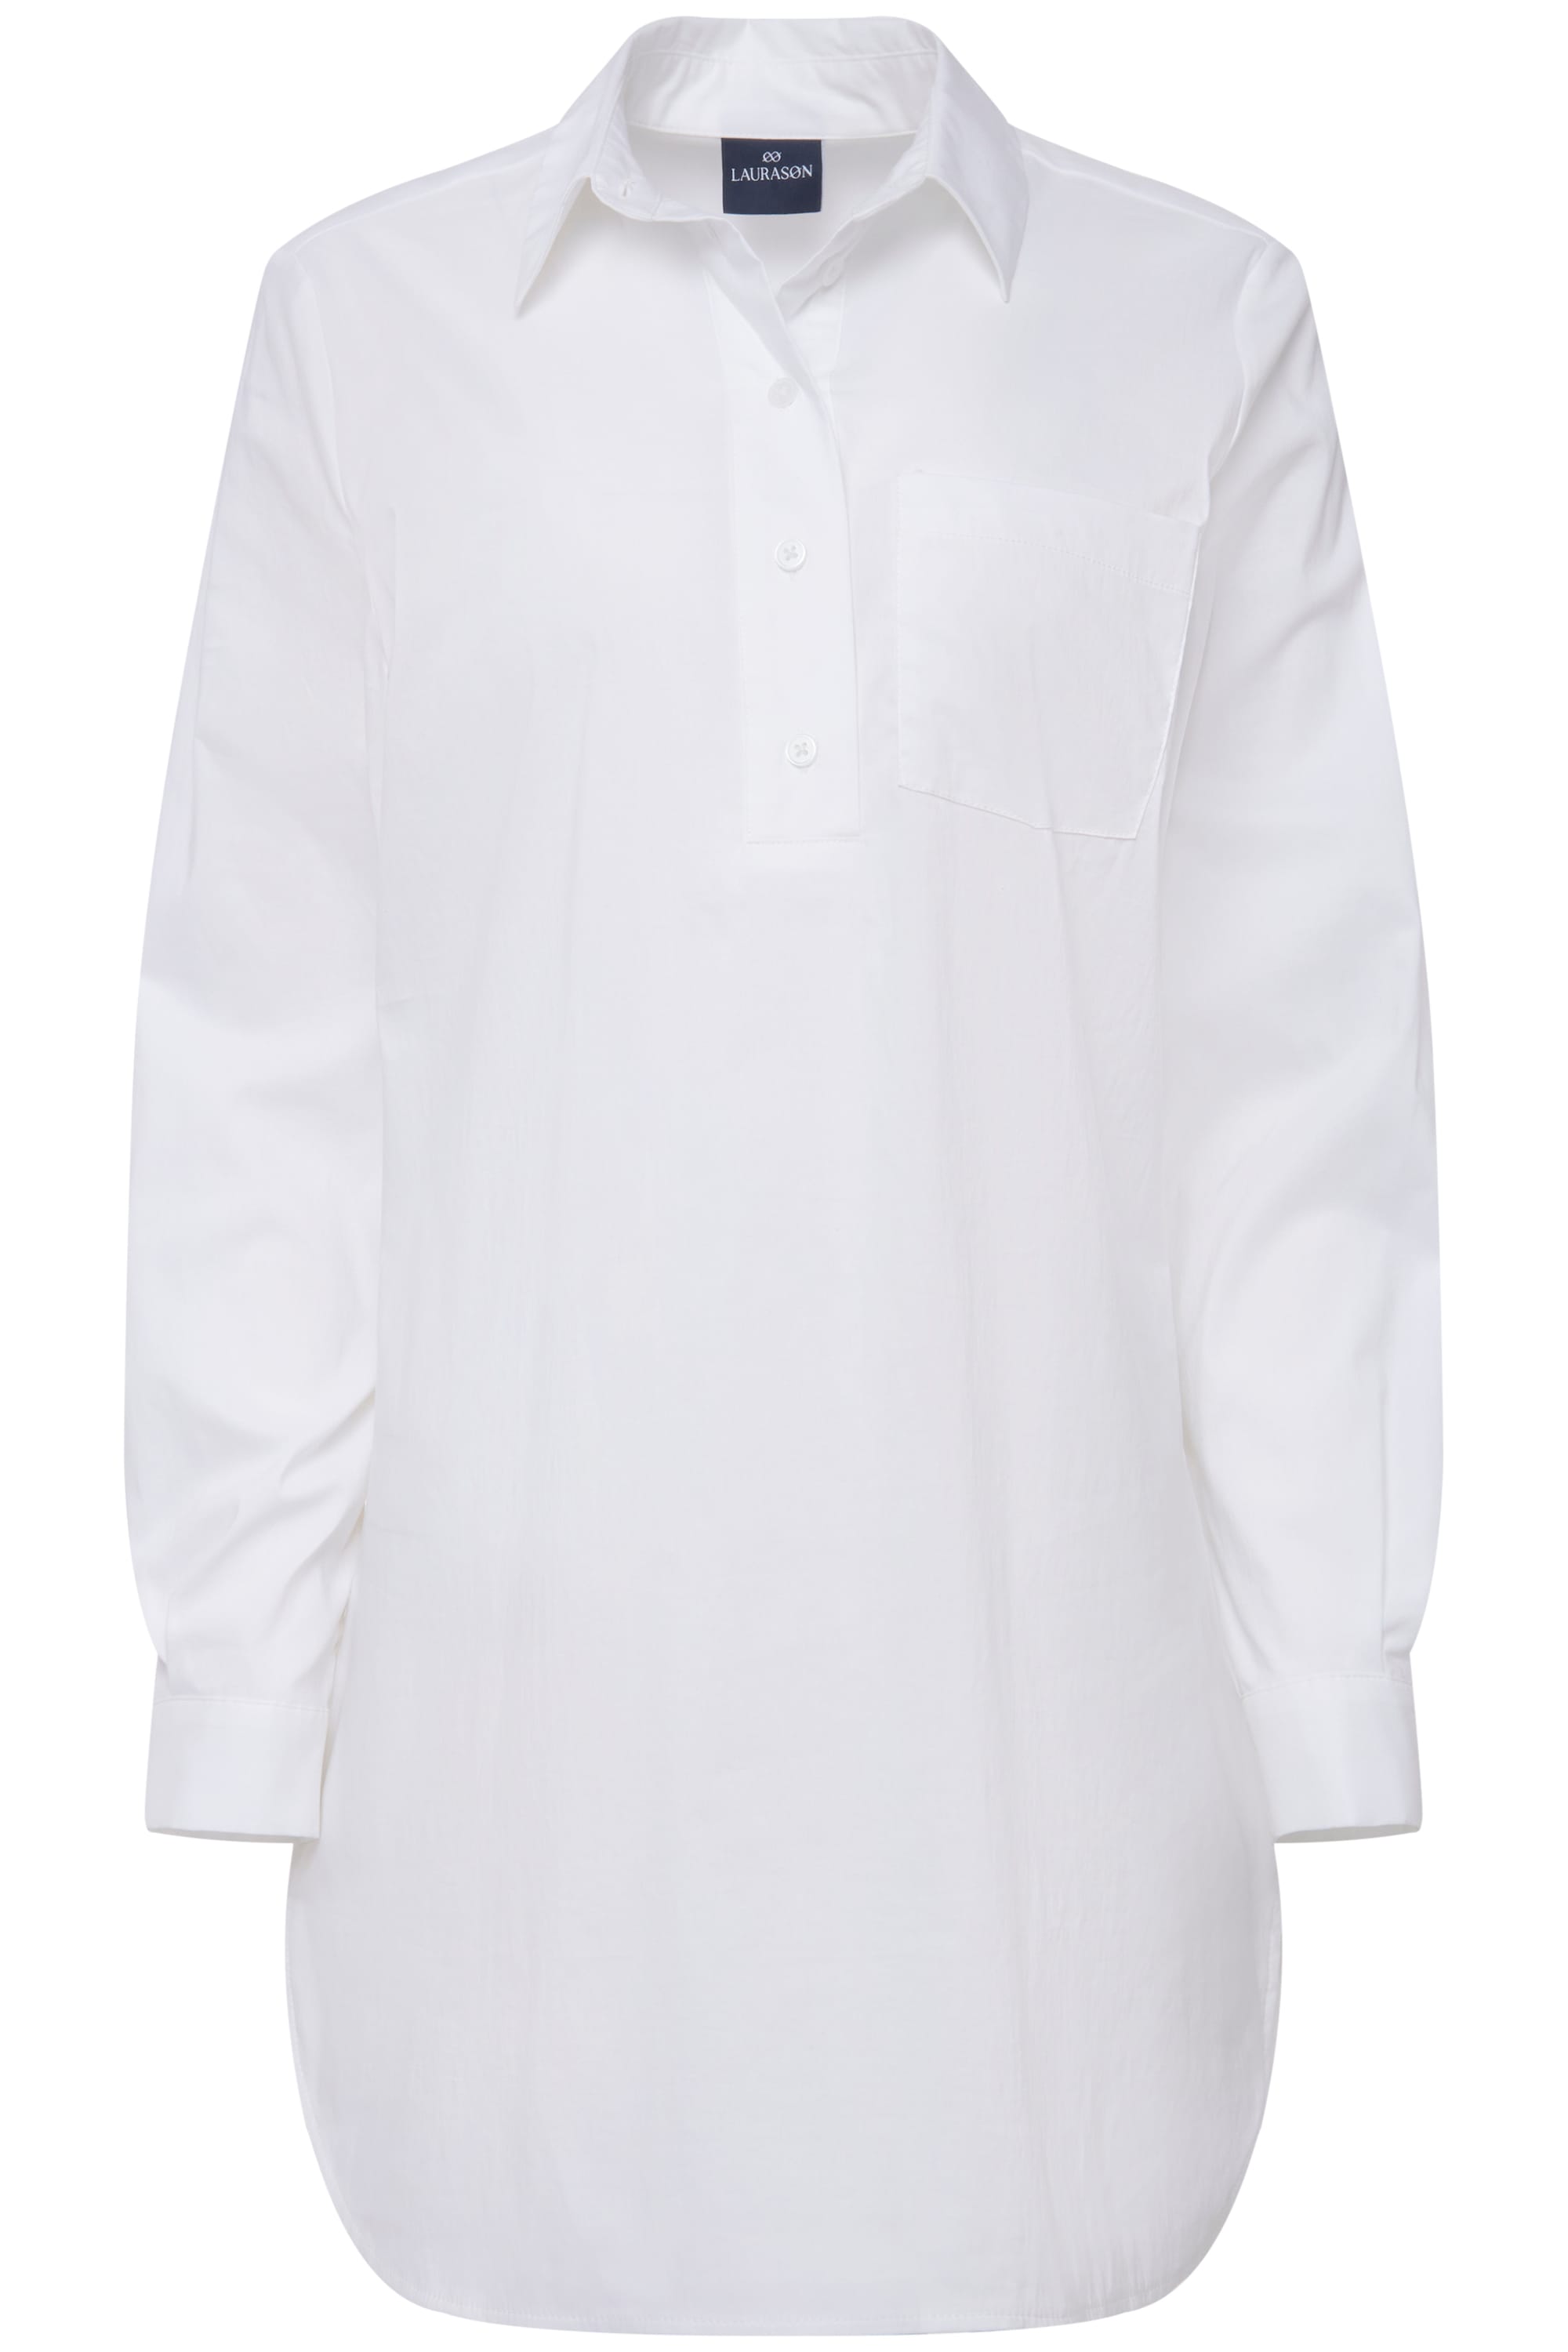 Блуза LAURASØN Hemd, белый